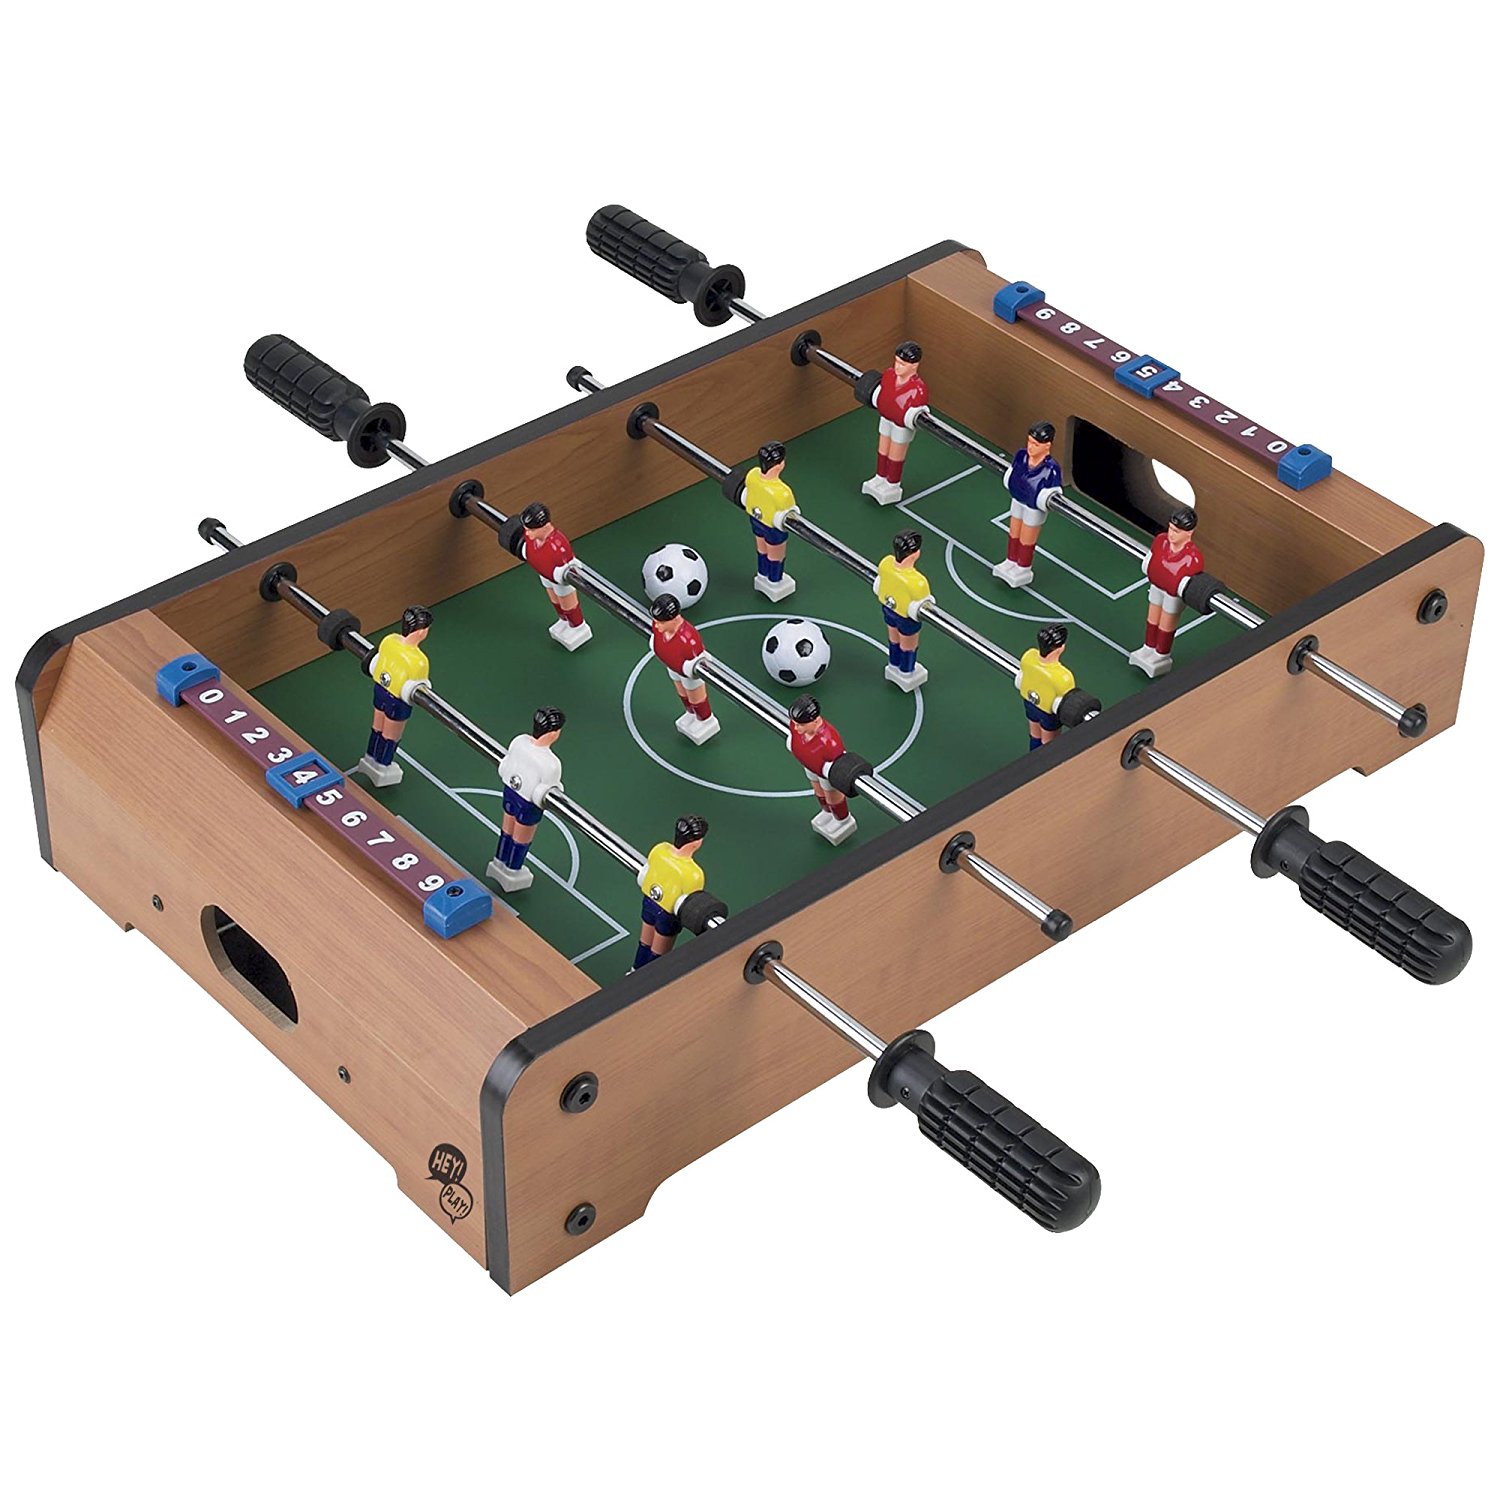 Amazon.com: Tabletop Foosball Table- Portable Mini Table Football ...